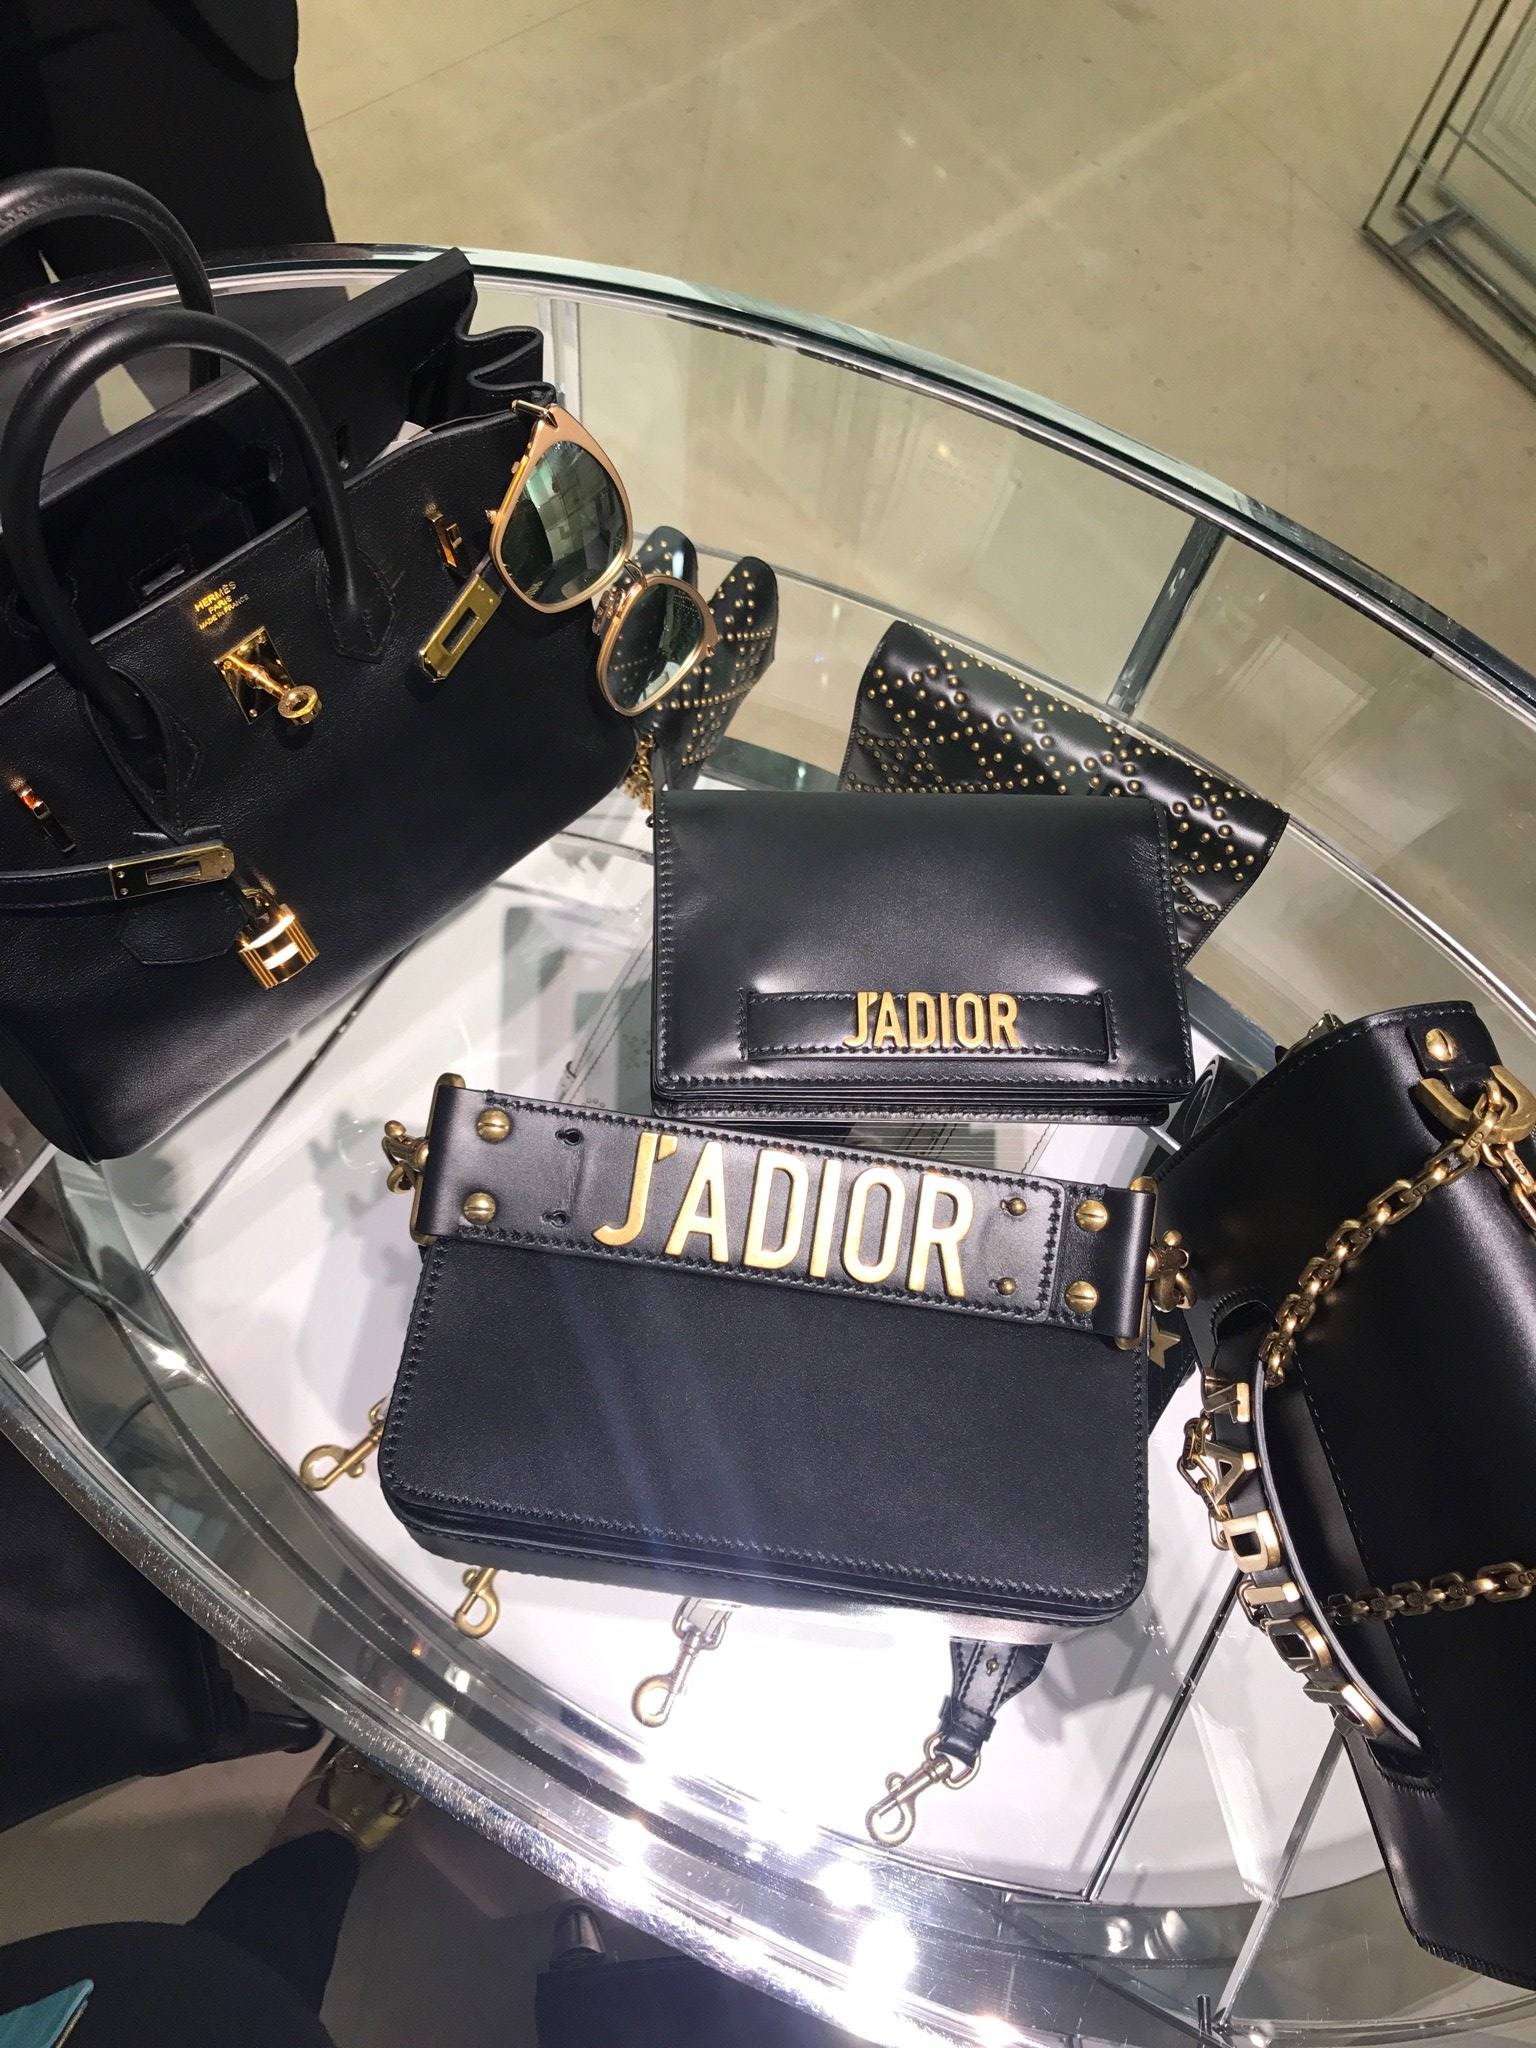 New at Dior: The J'ADIOR Collection - PurseBop